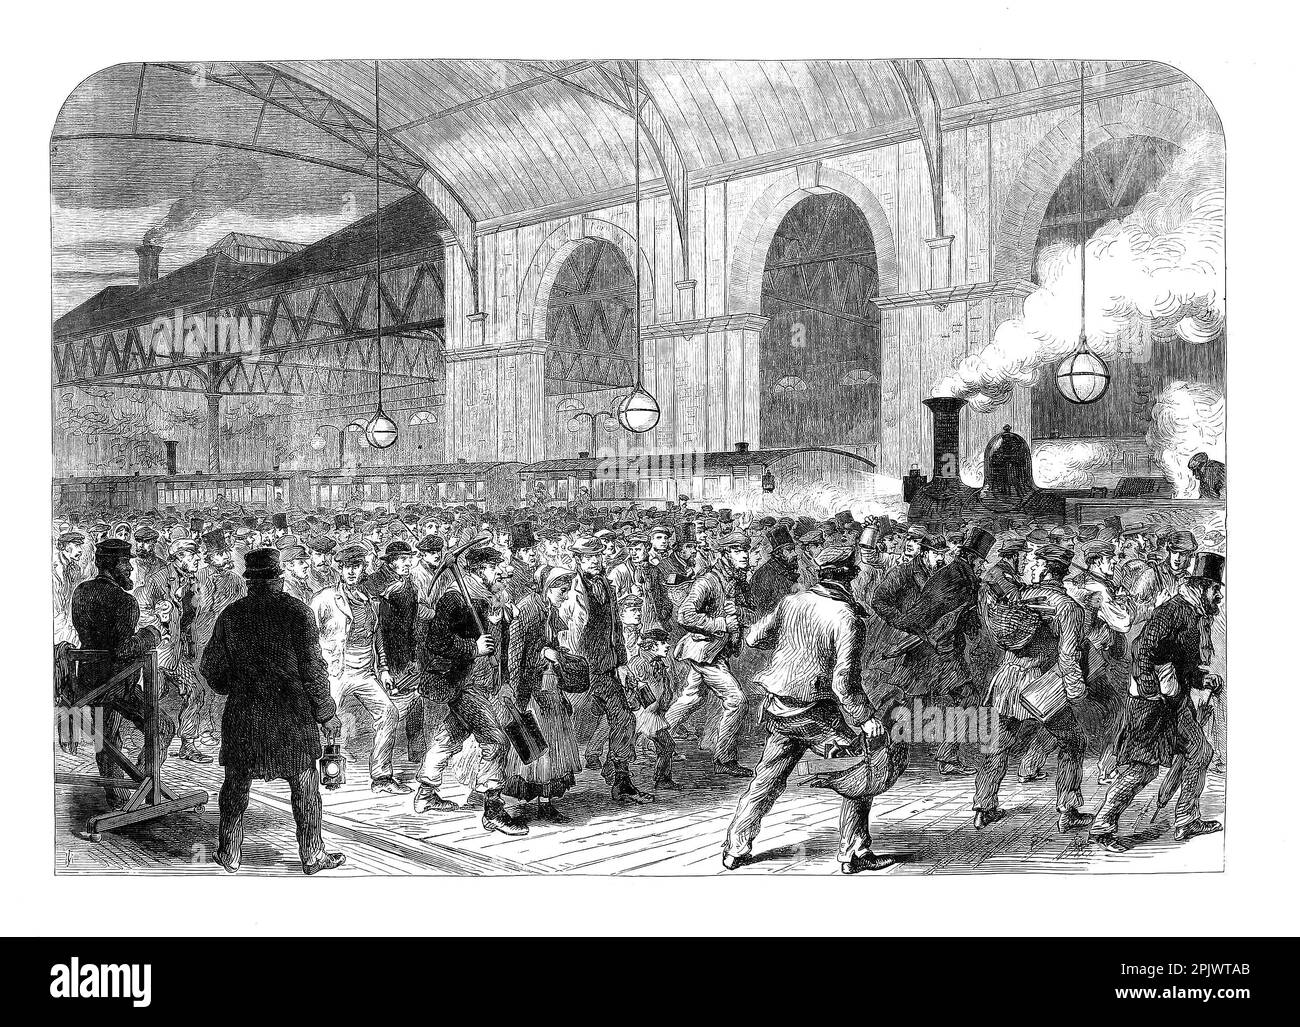 April 1865 und die Ankunft des Arbeiter-Penny-Zuges in Victoria Station, London, England Stockfoto